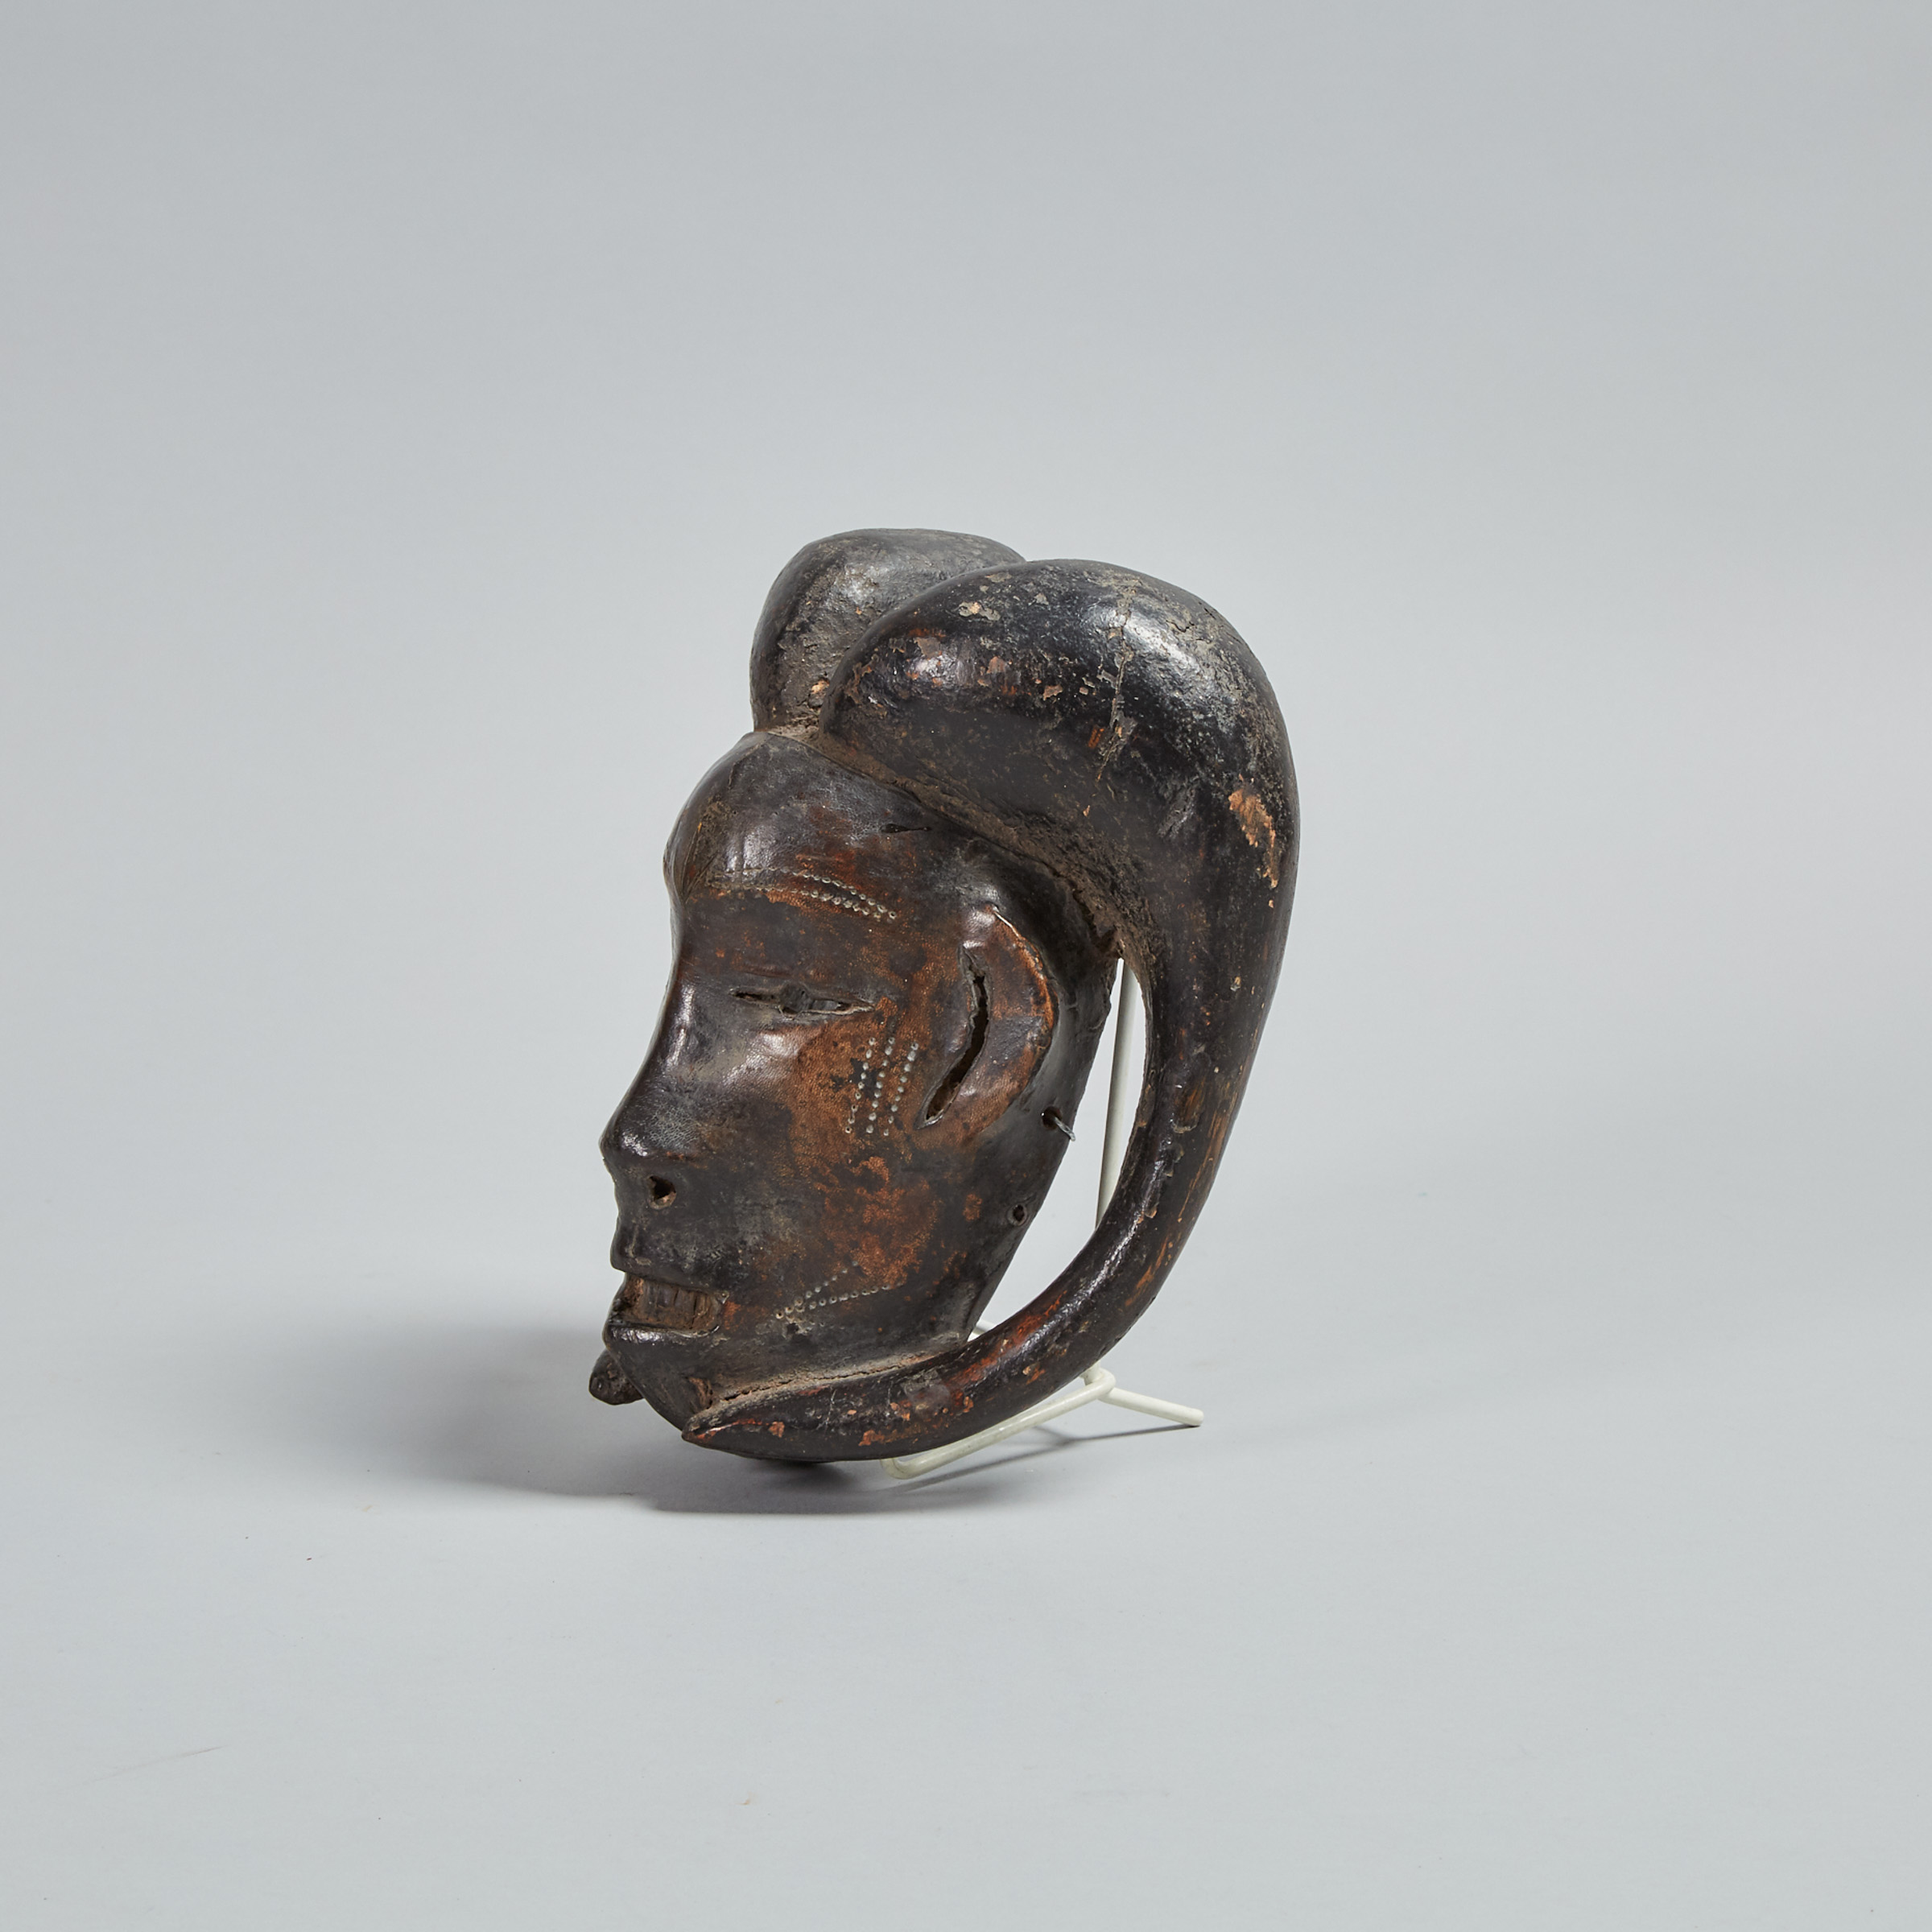 Anthropo-zoomorphic Mask, possibly Ekoi or Guro, Nigeria/ Cameroon, West Africa